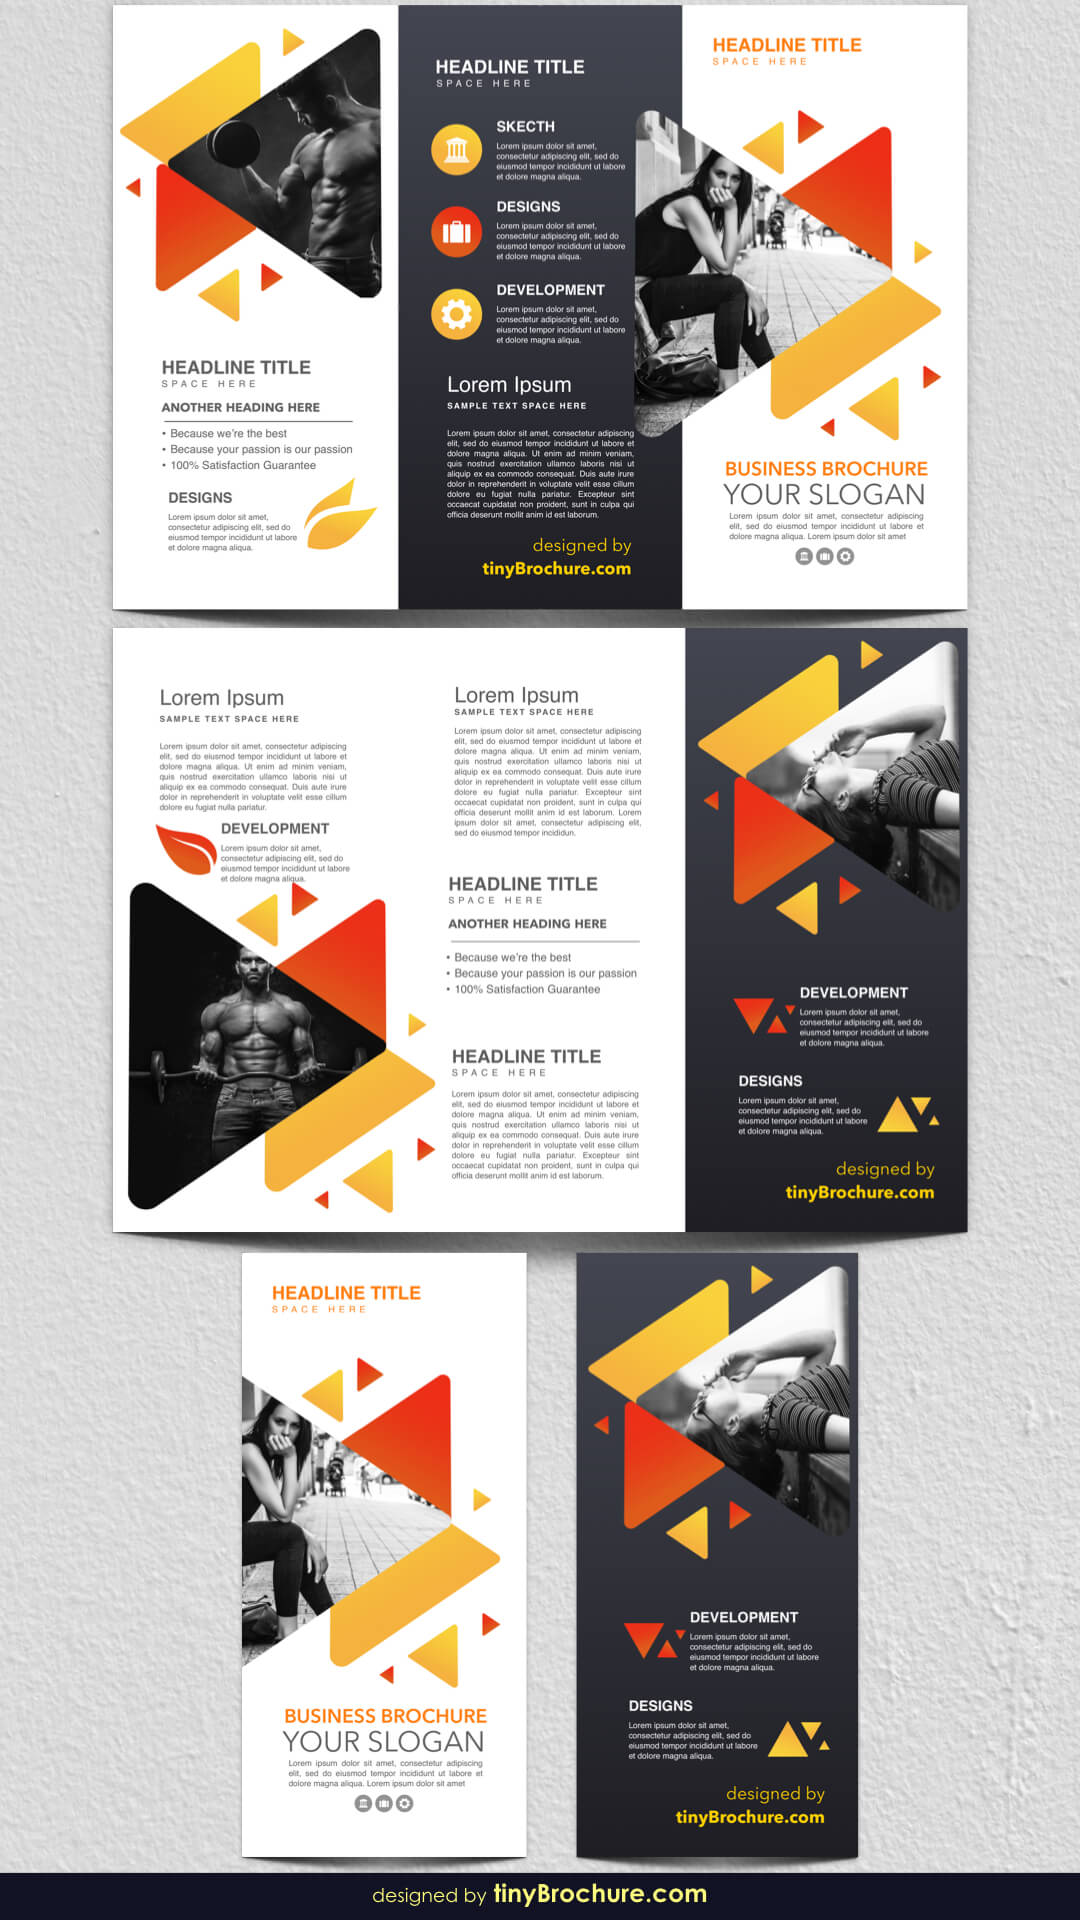 3 Panel Brochure Template Google Docs 2019 | Graphic Design Regarding Google Docs Tri Fold Brochure Template